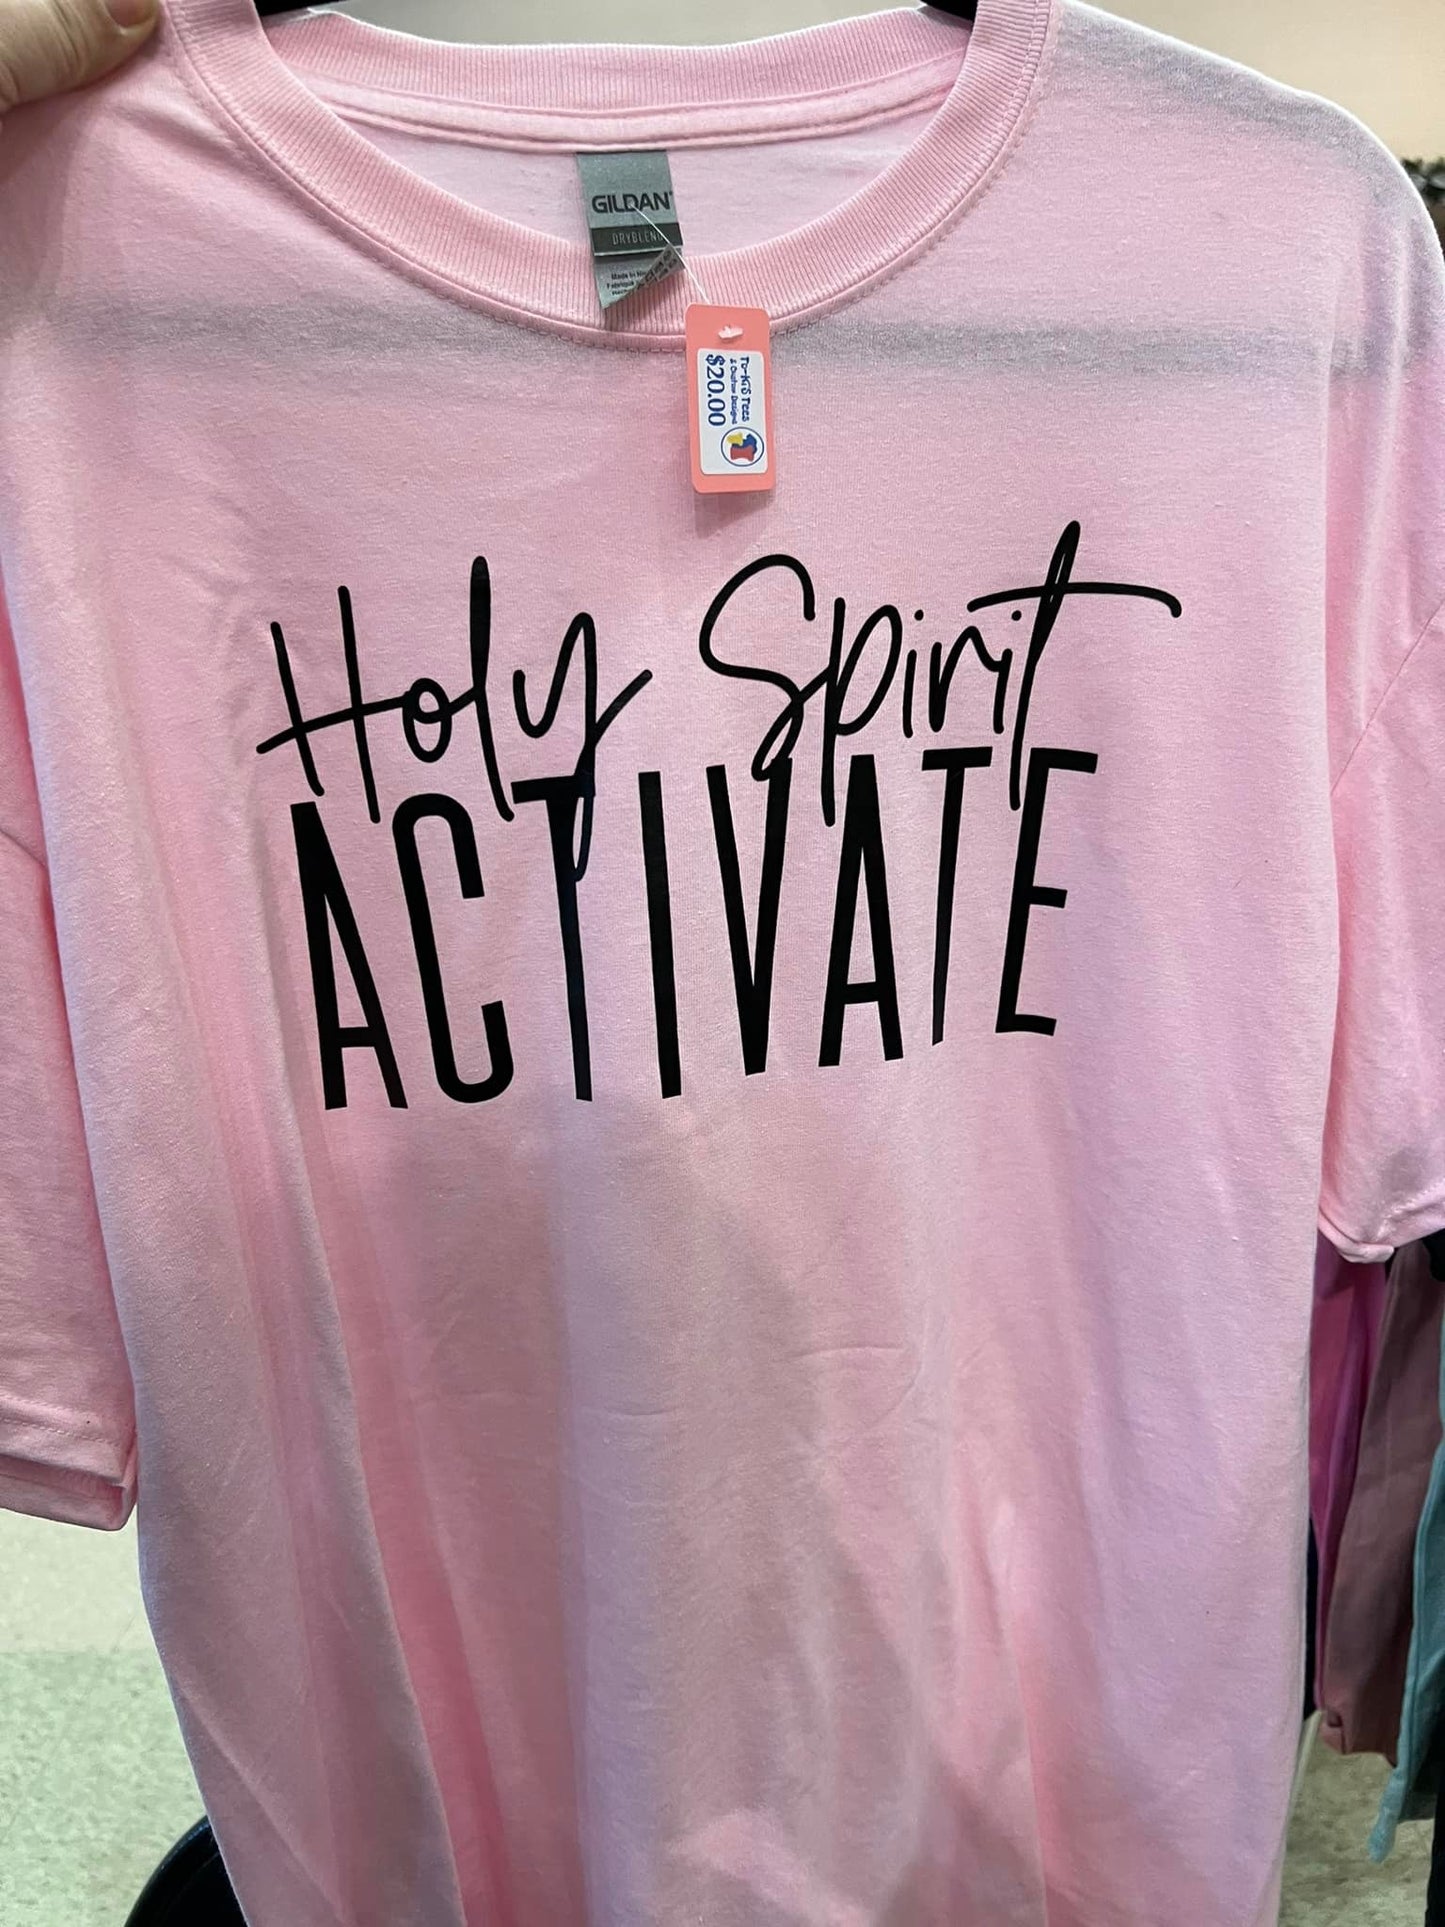 HOLY SPIRIT ACTIVATE T-SHIRT